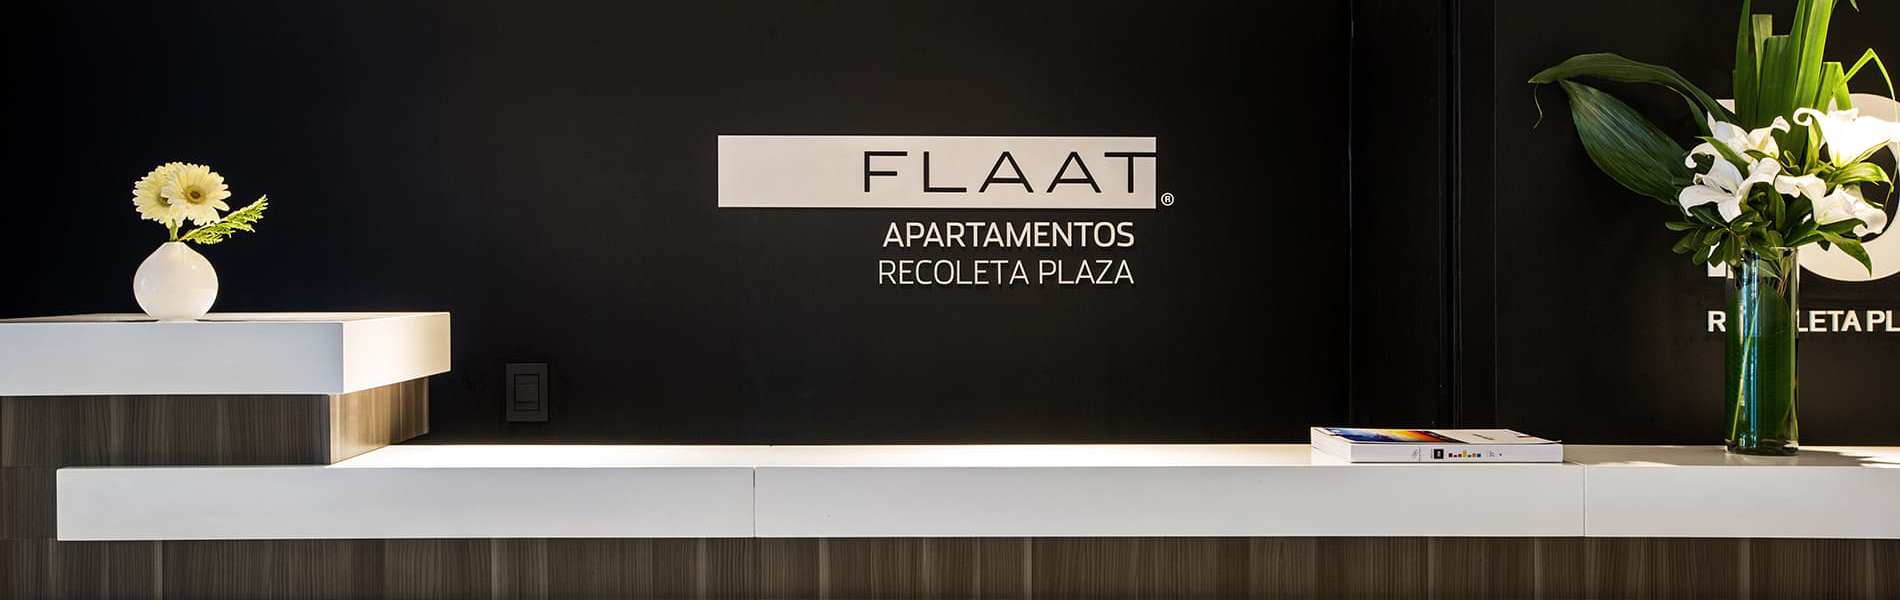 Flaat Recoleta Plaza